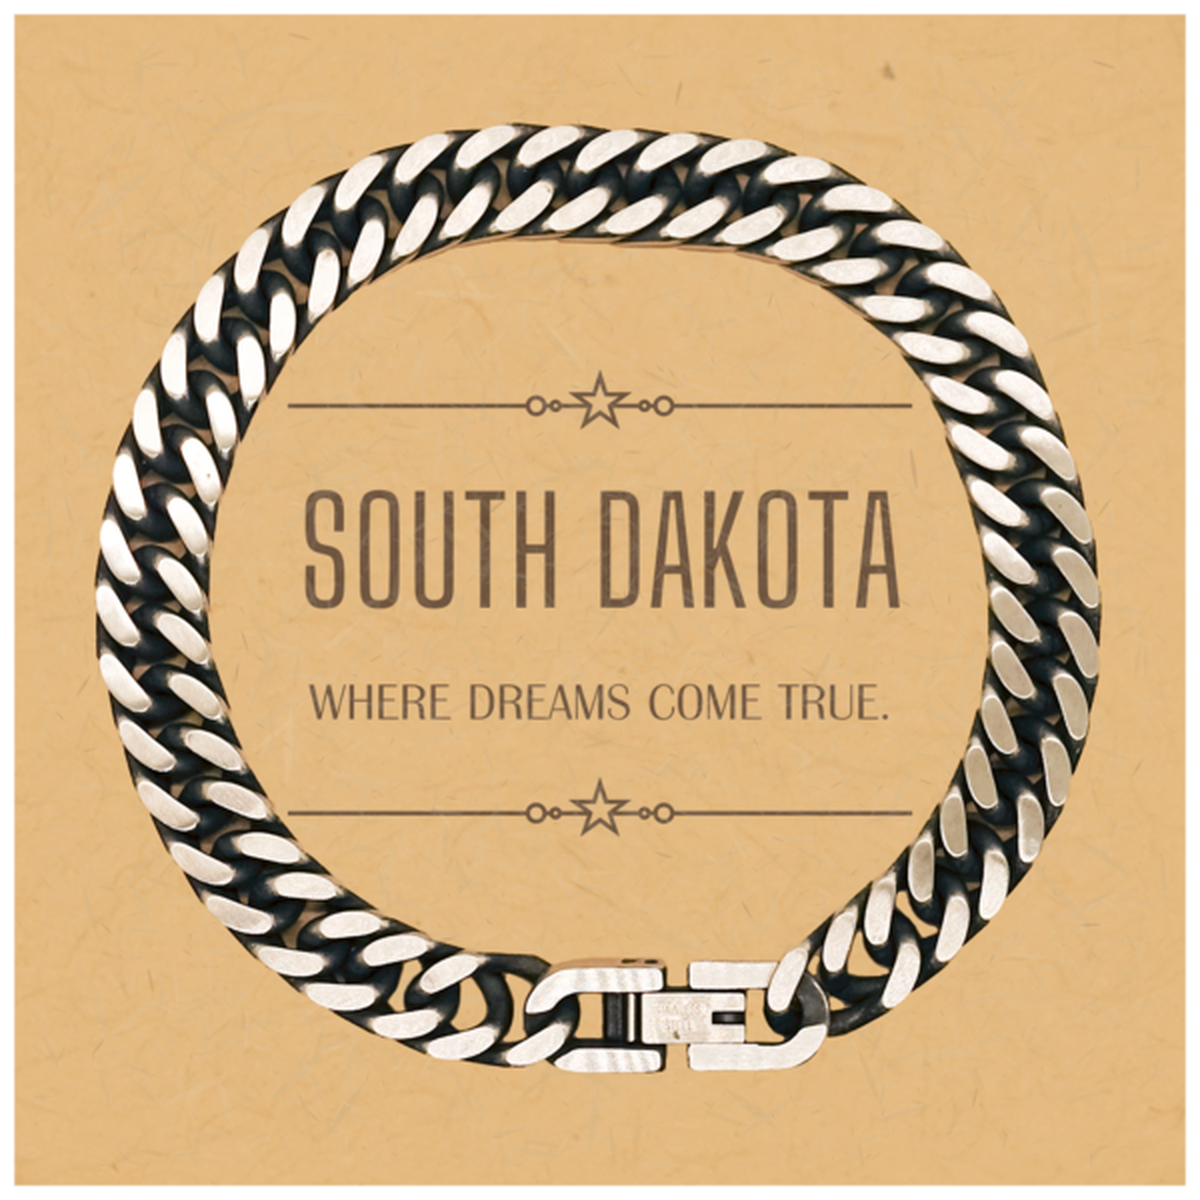 Love South Dakota State Cuban Link Chain Bracelet, South Dakota Where dreams come true, Birthday Christmas Inspirational Gifts For South Dakota Men, Women, Friends